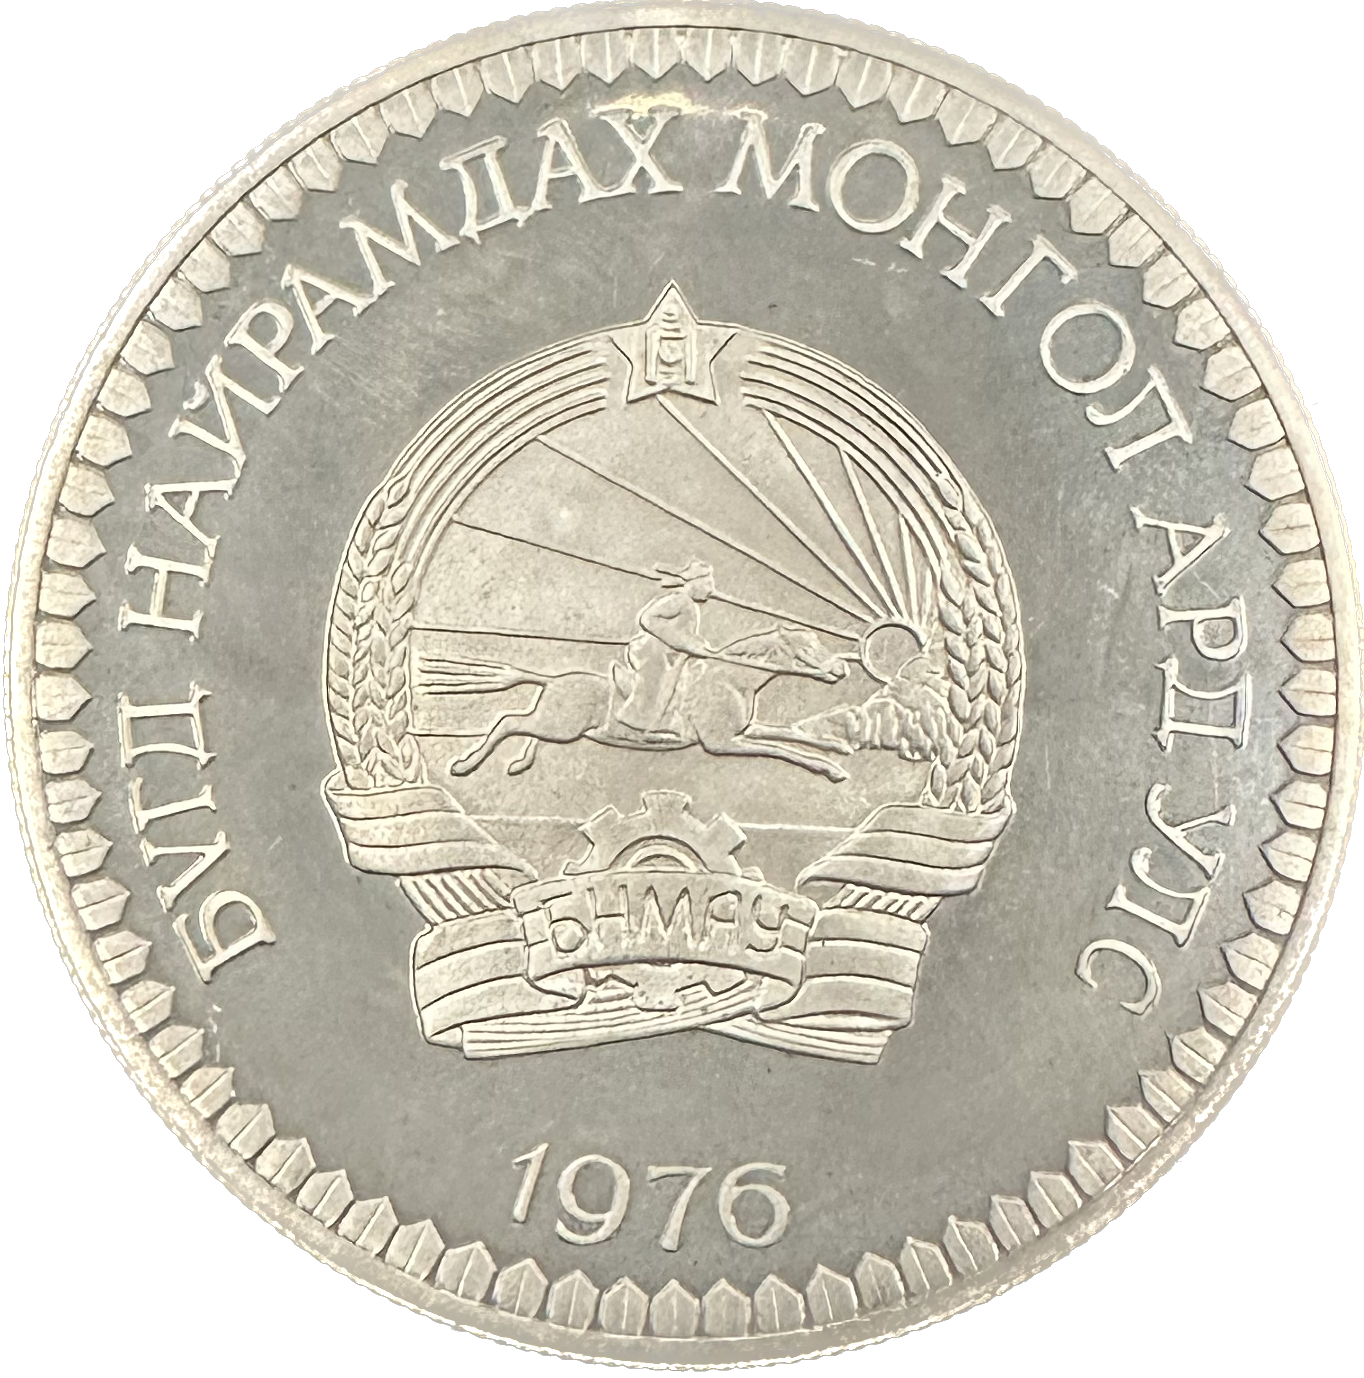 Mongolia 50 Tugrik 1976 KM37 Proof 1.04oz ASW Coin